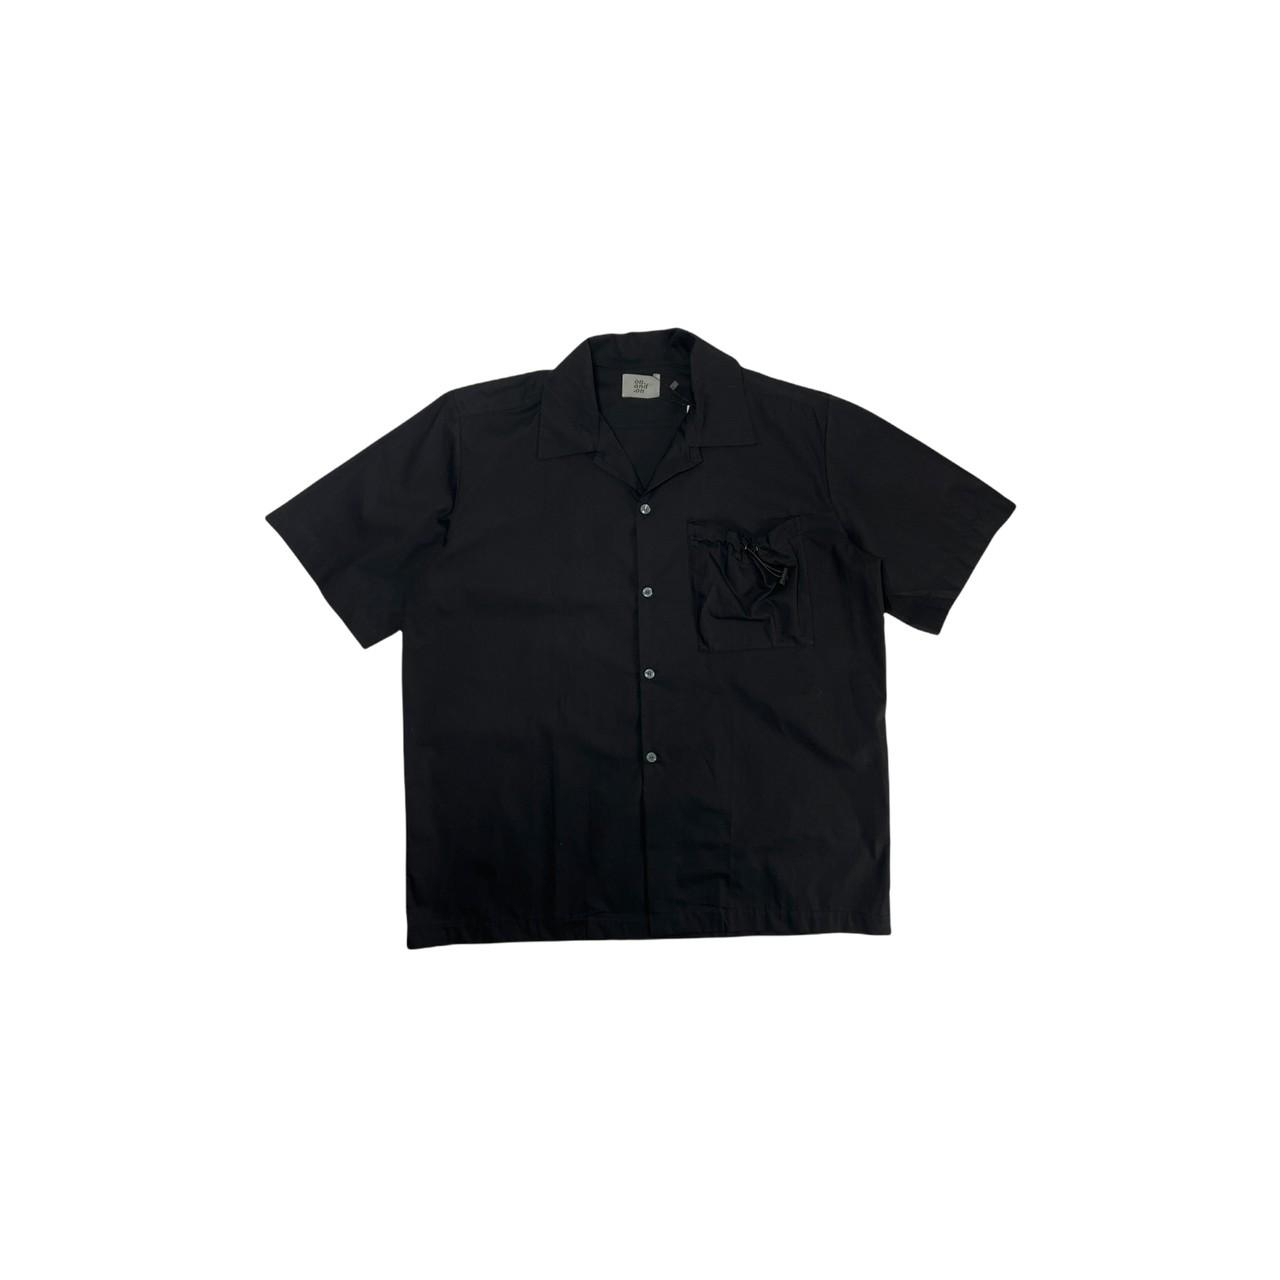 Brother Shirt (Black)